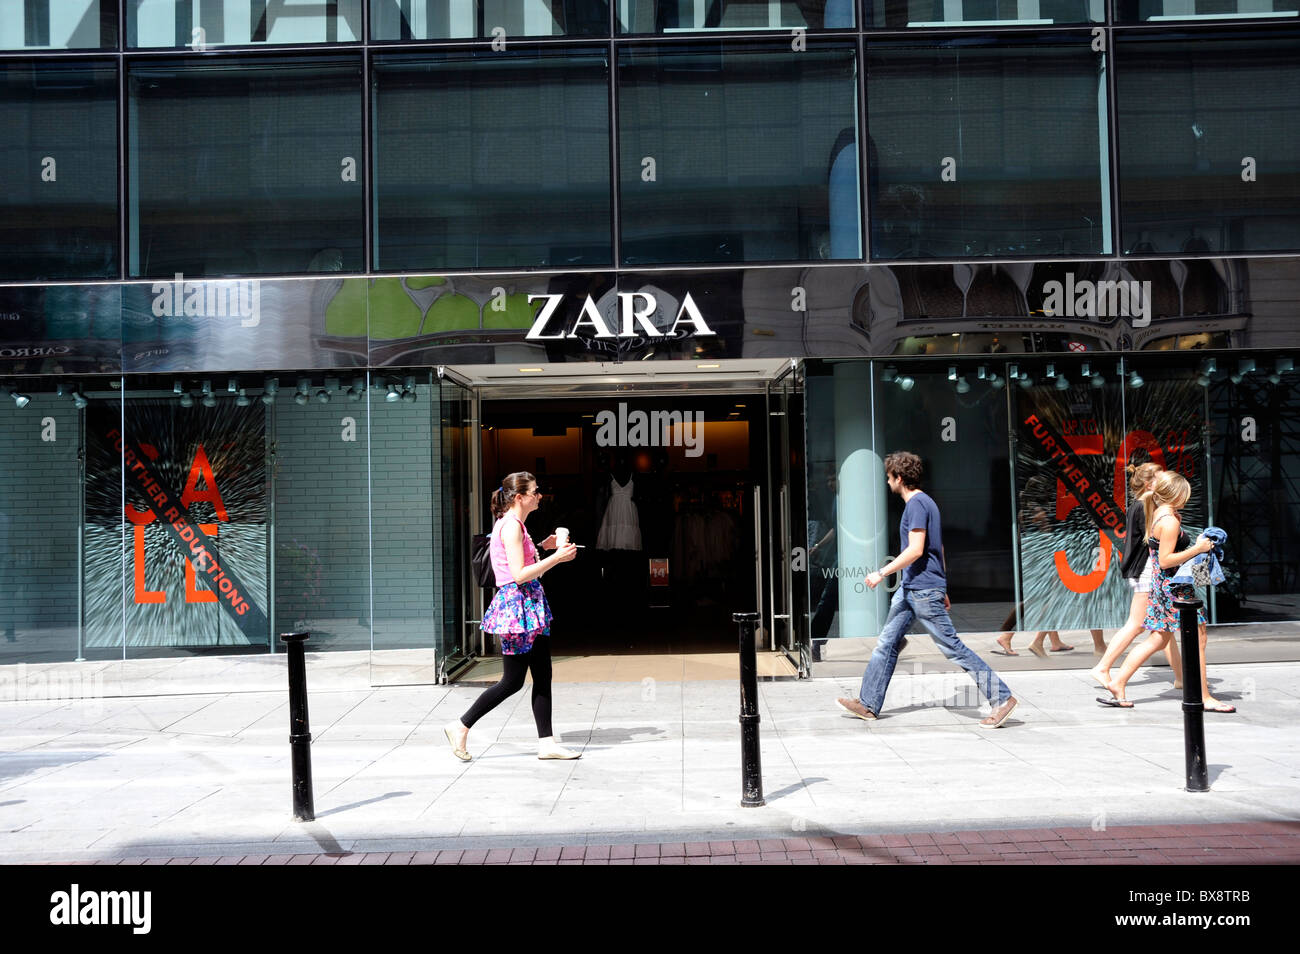 Zara-Shop in der King Street South, Fußgängerzone Stadt Dublin, Irland  Stockfotografie - Alamy